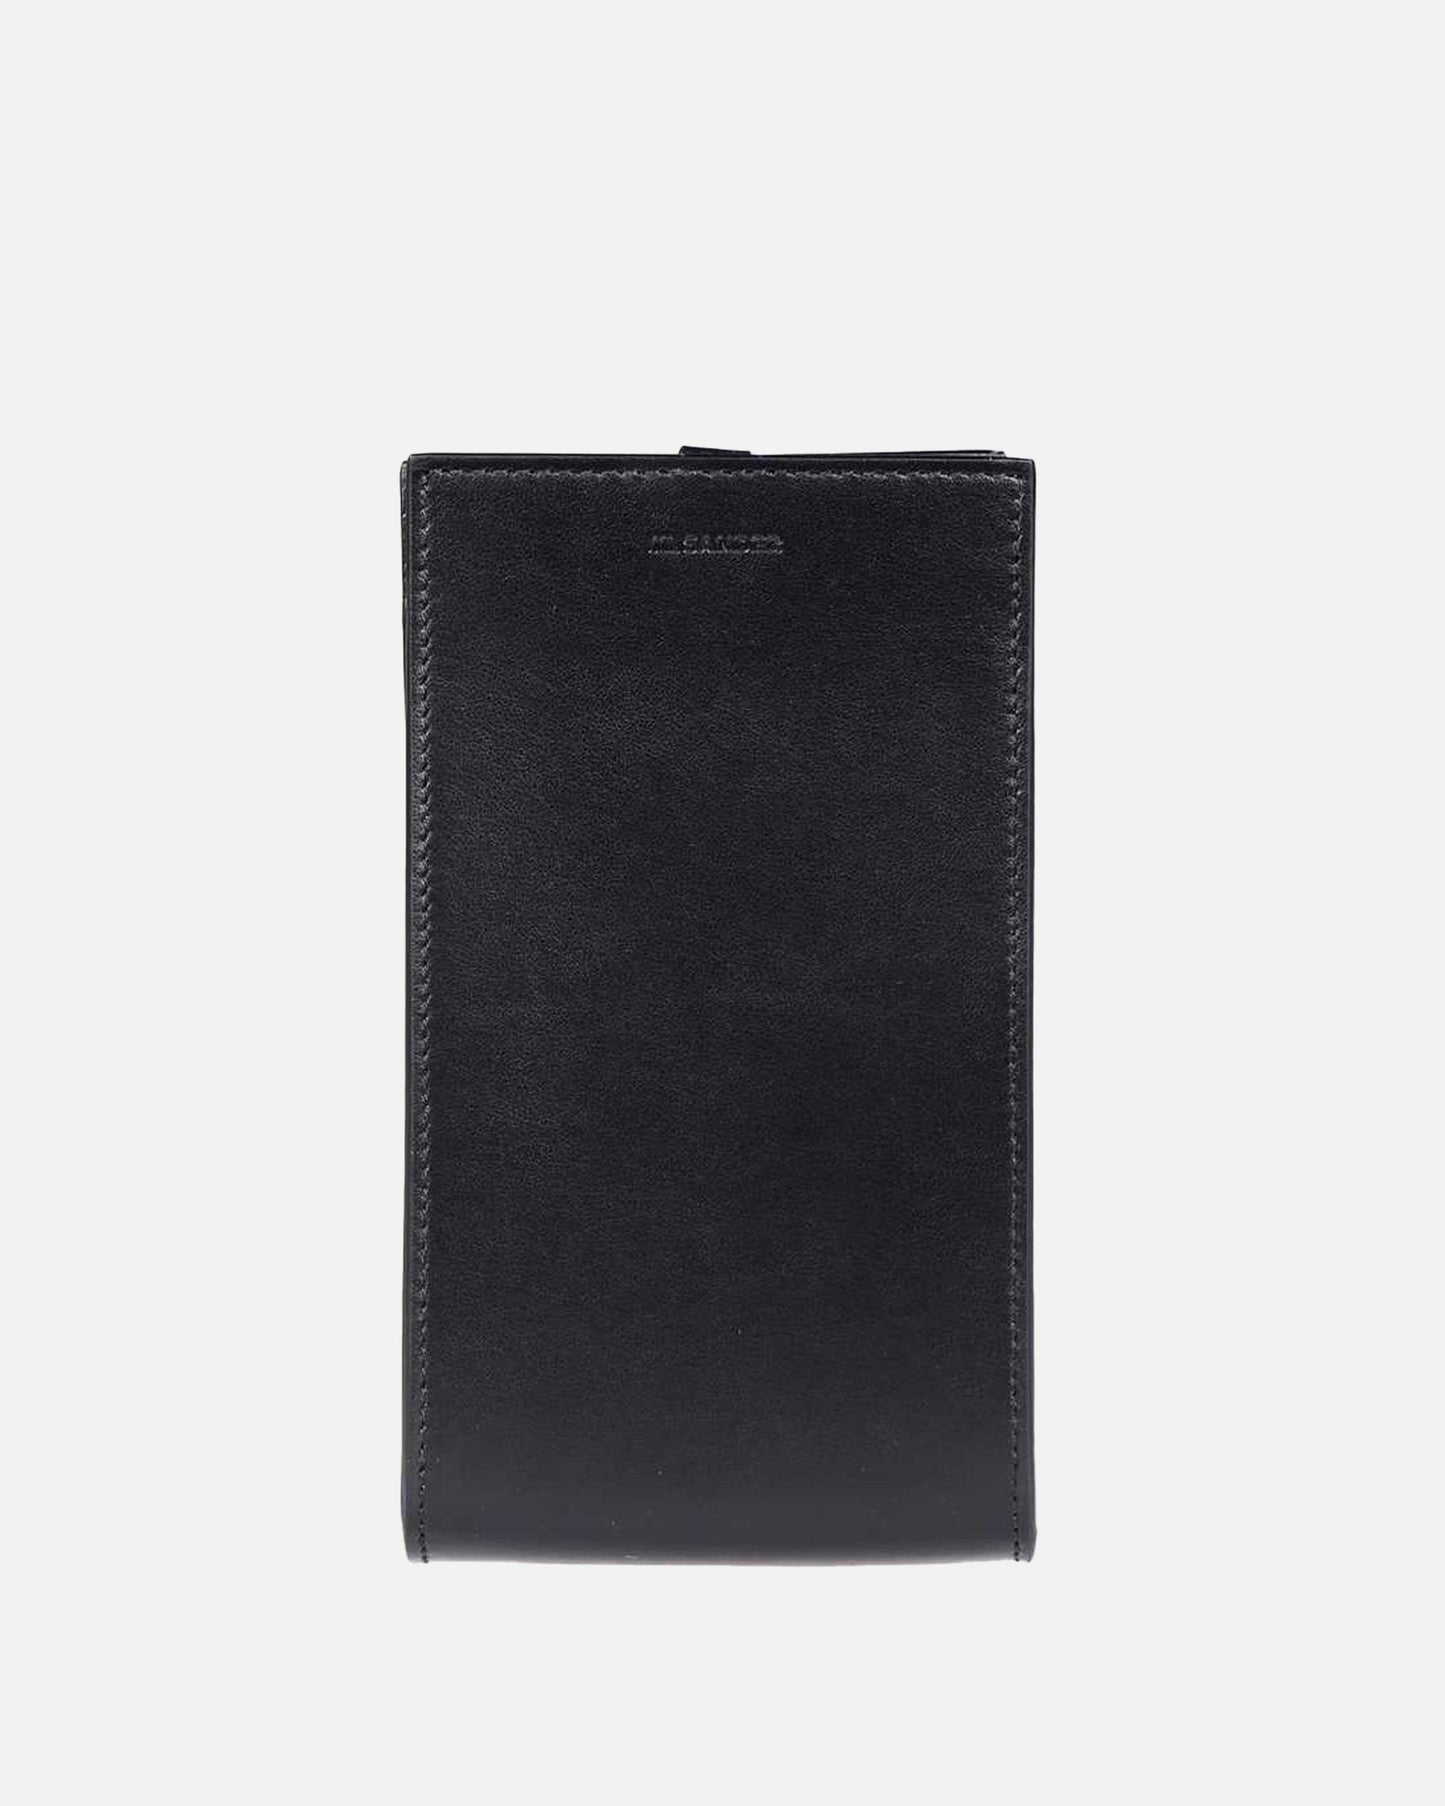 Jil Sander Leather Goods Tangle Phone Case in Black.